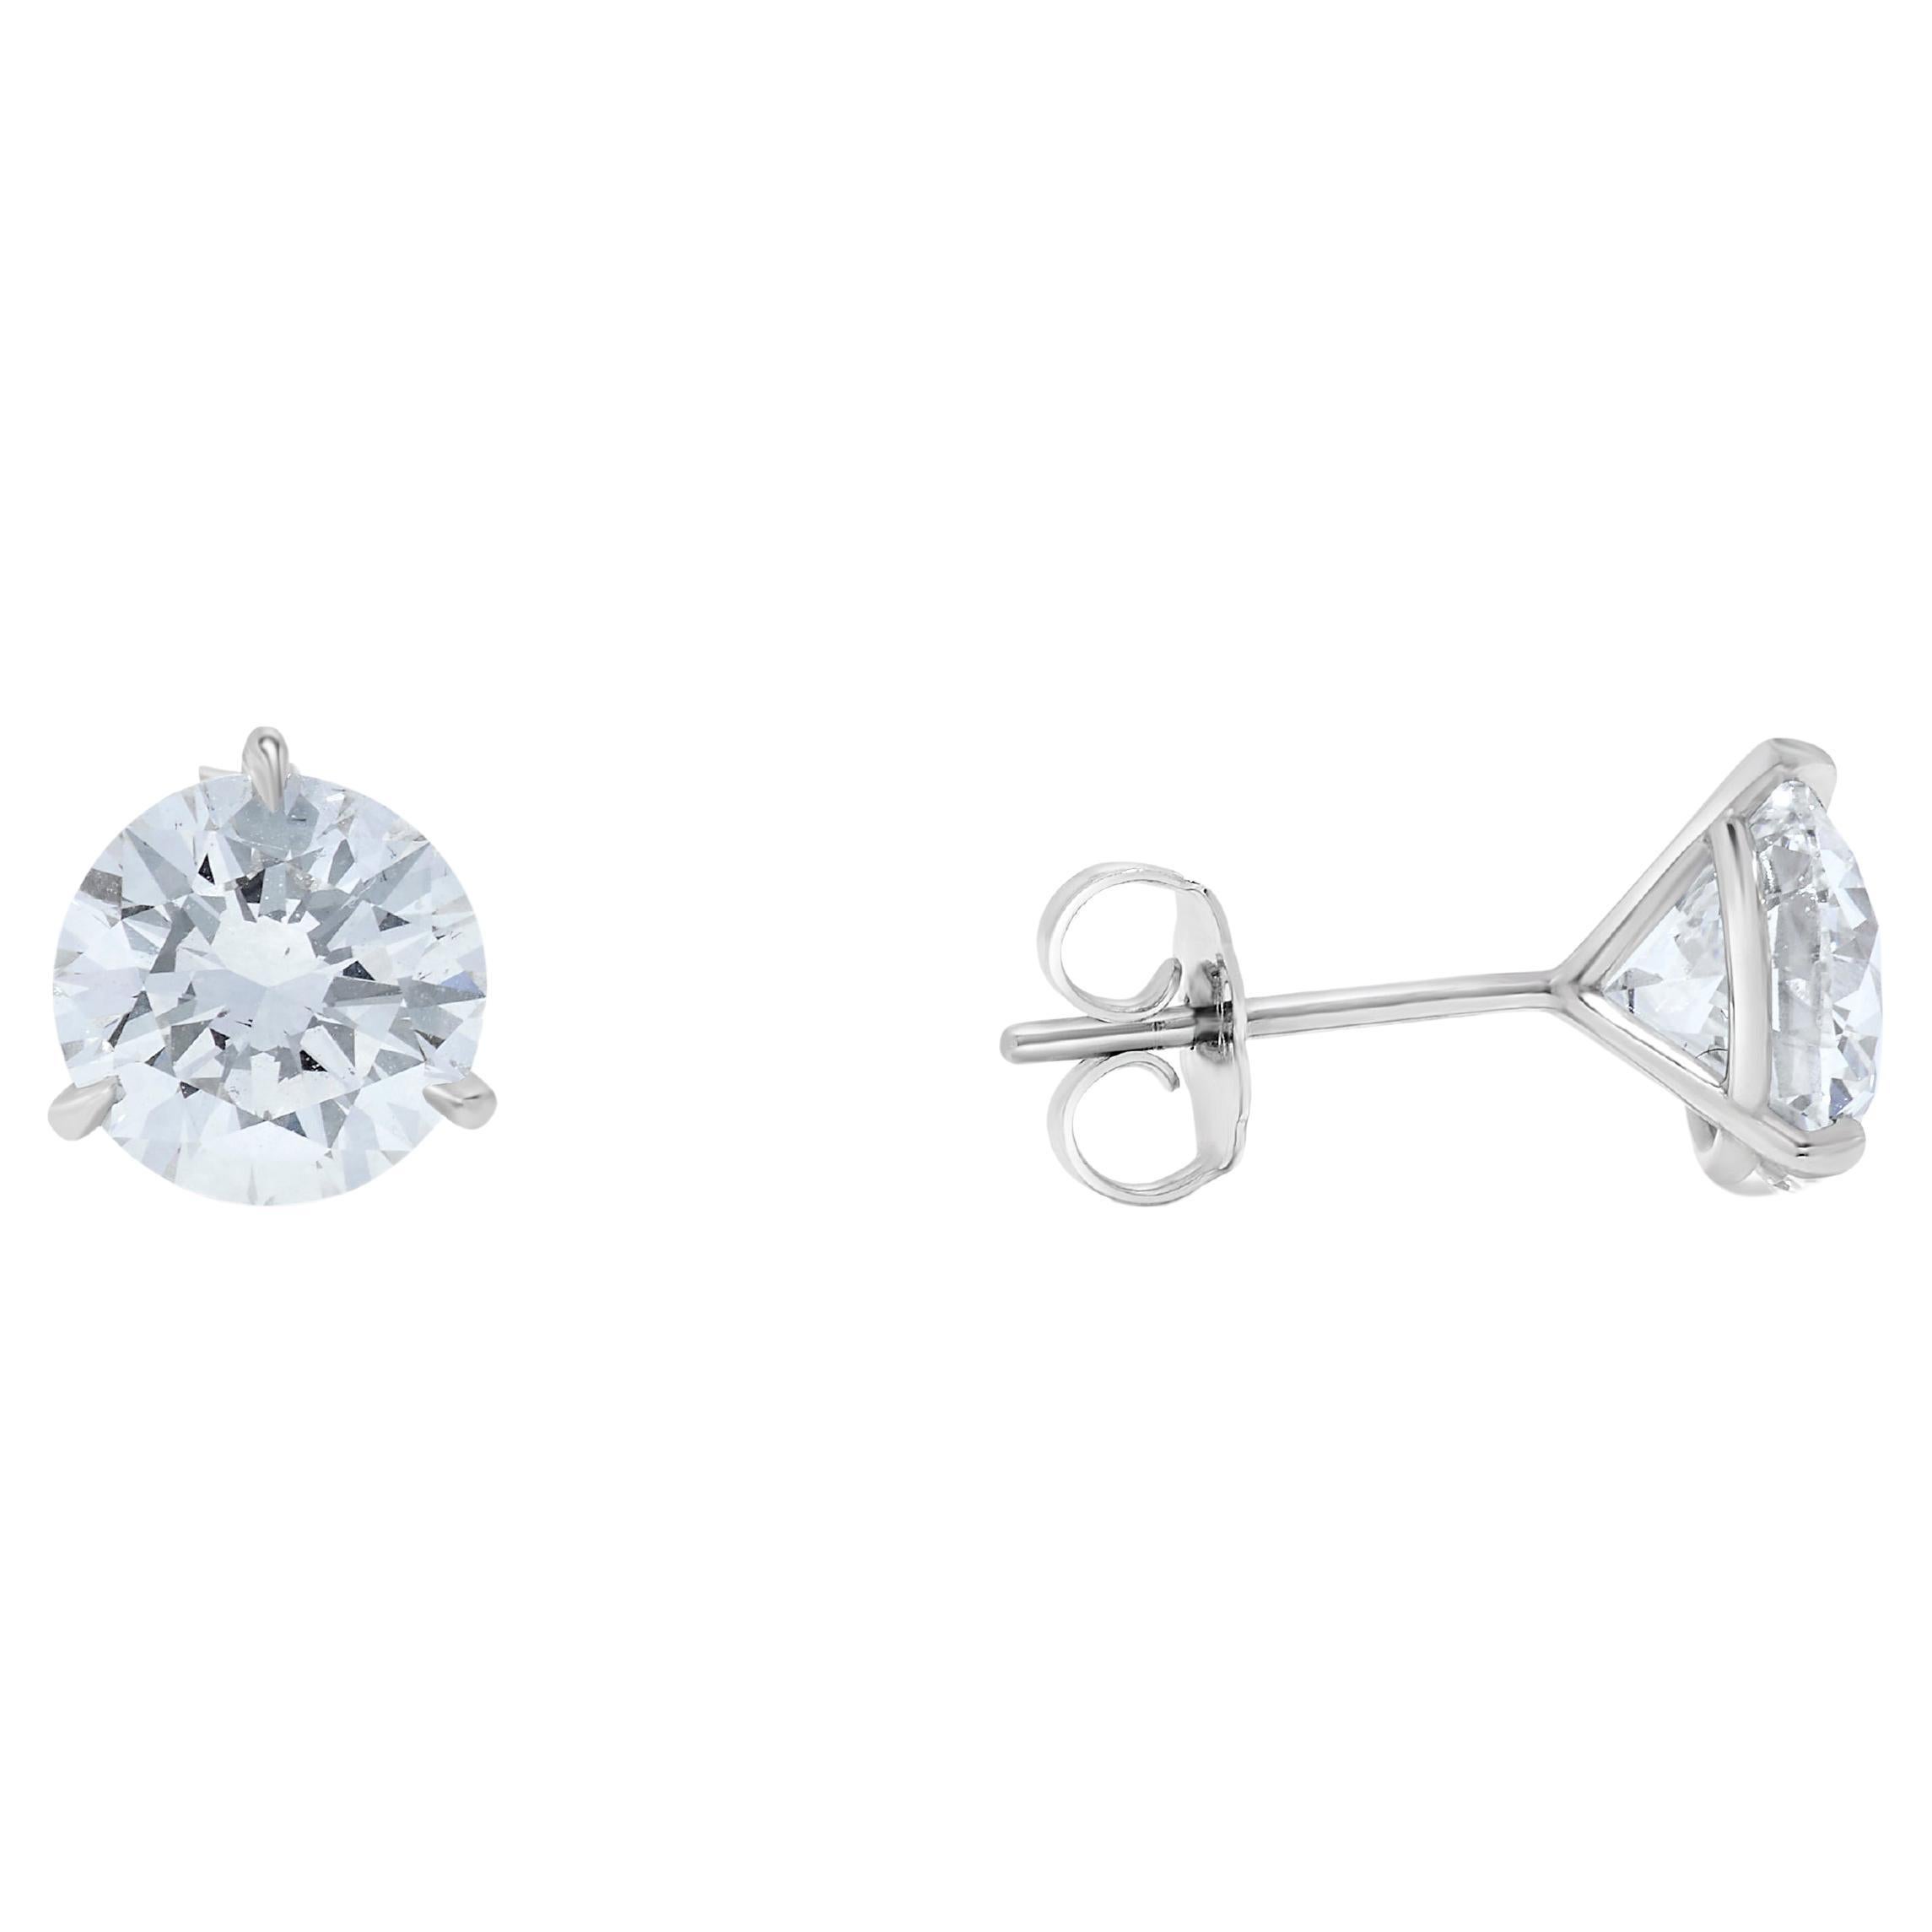 4.04 Carat GIA Certified Diamond Stud Earrings For Sale